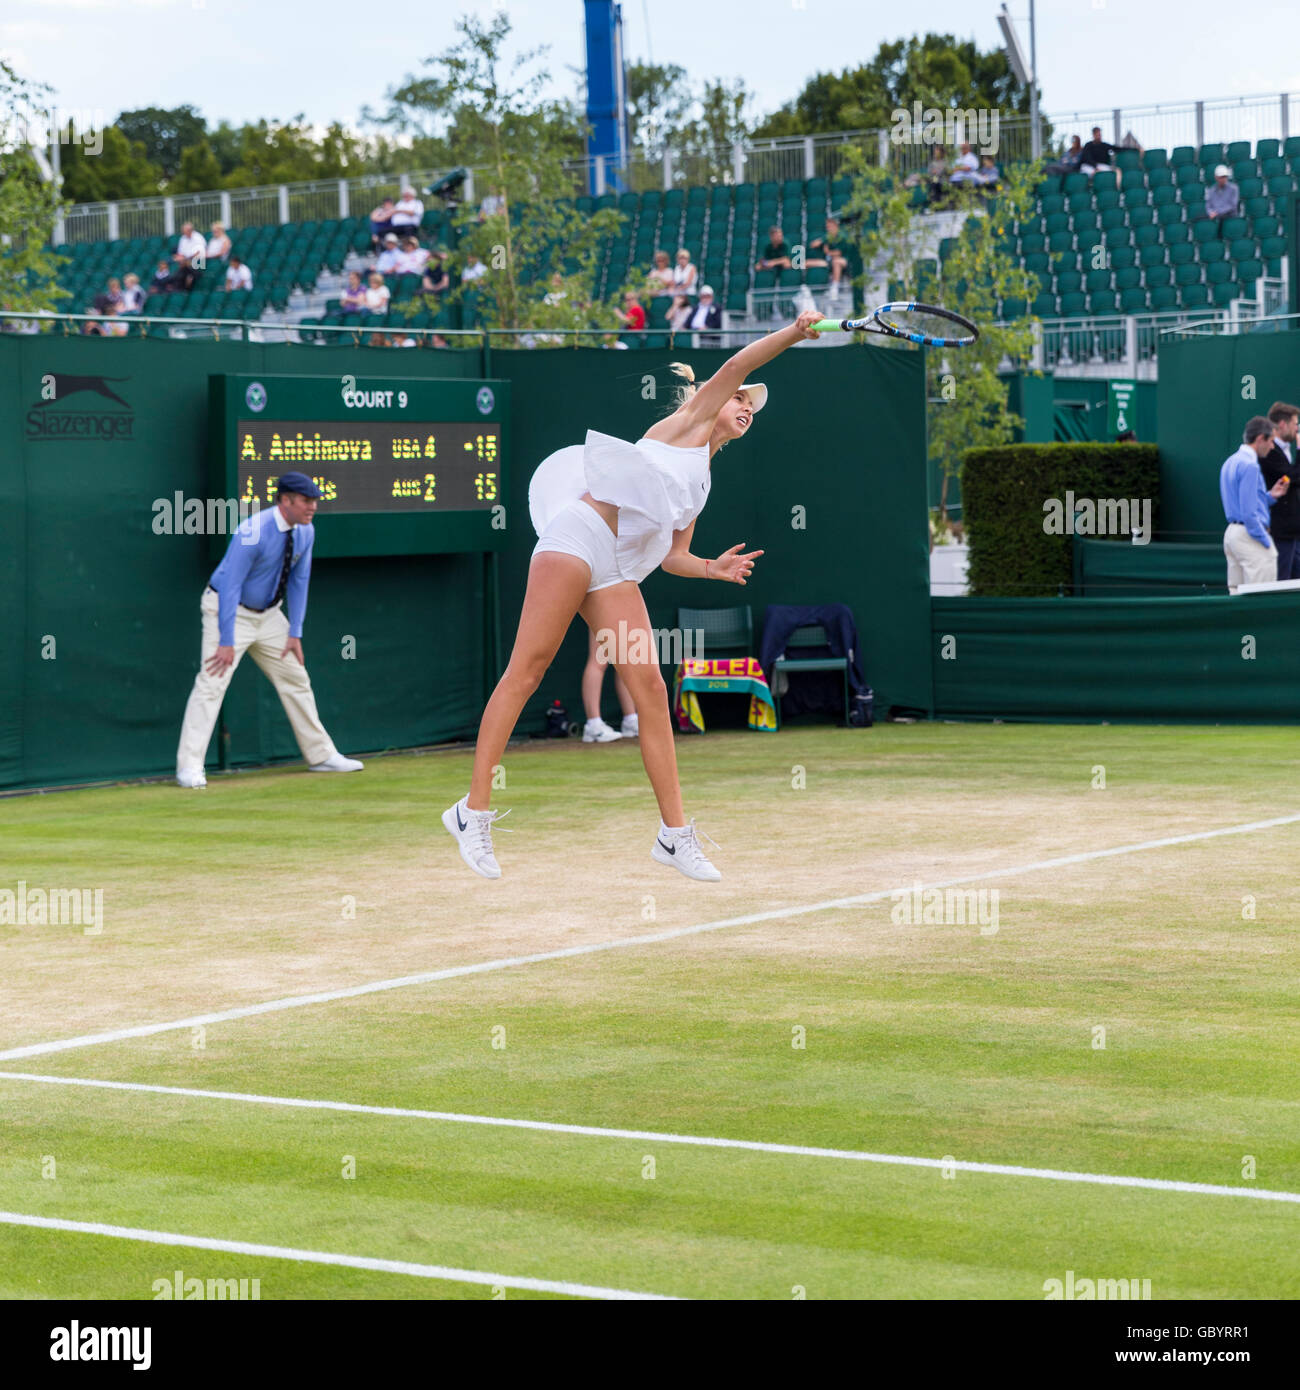 Amanda Anisimova, tenista estadounidense, sirve en los campeonatos de Wimbledon 2016 Foto de stock